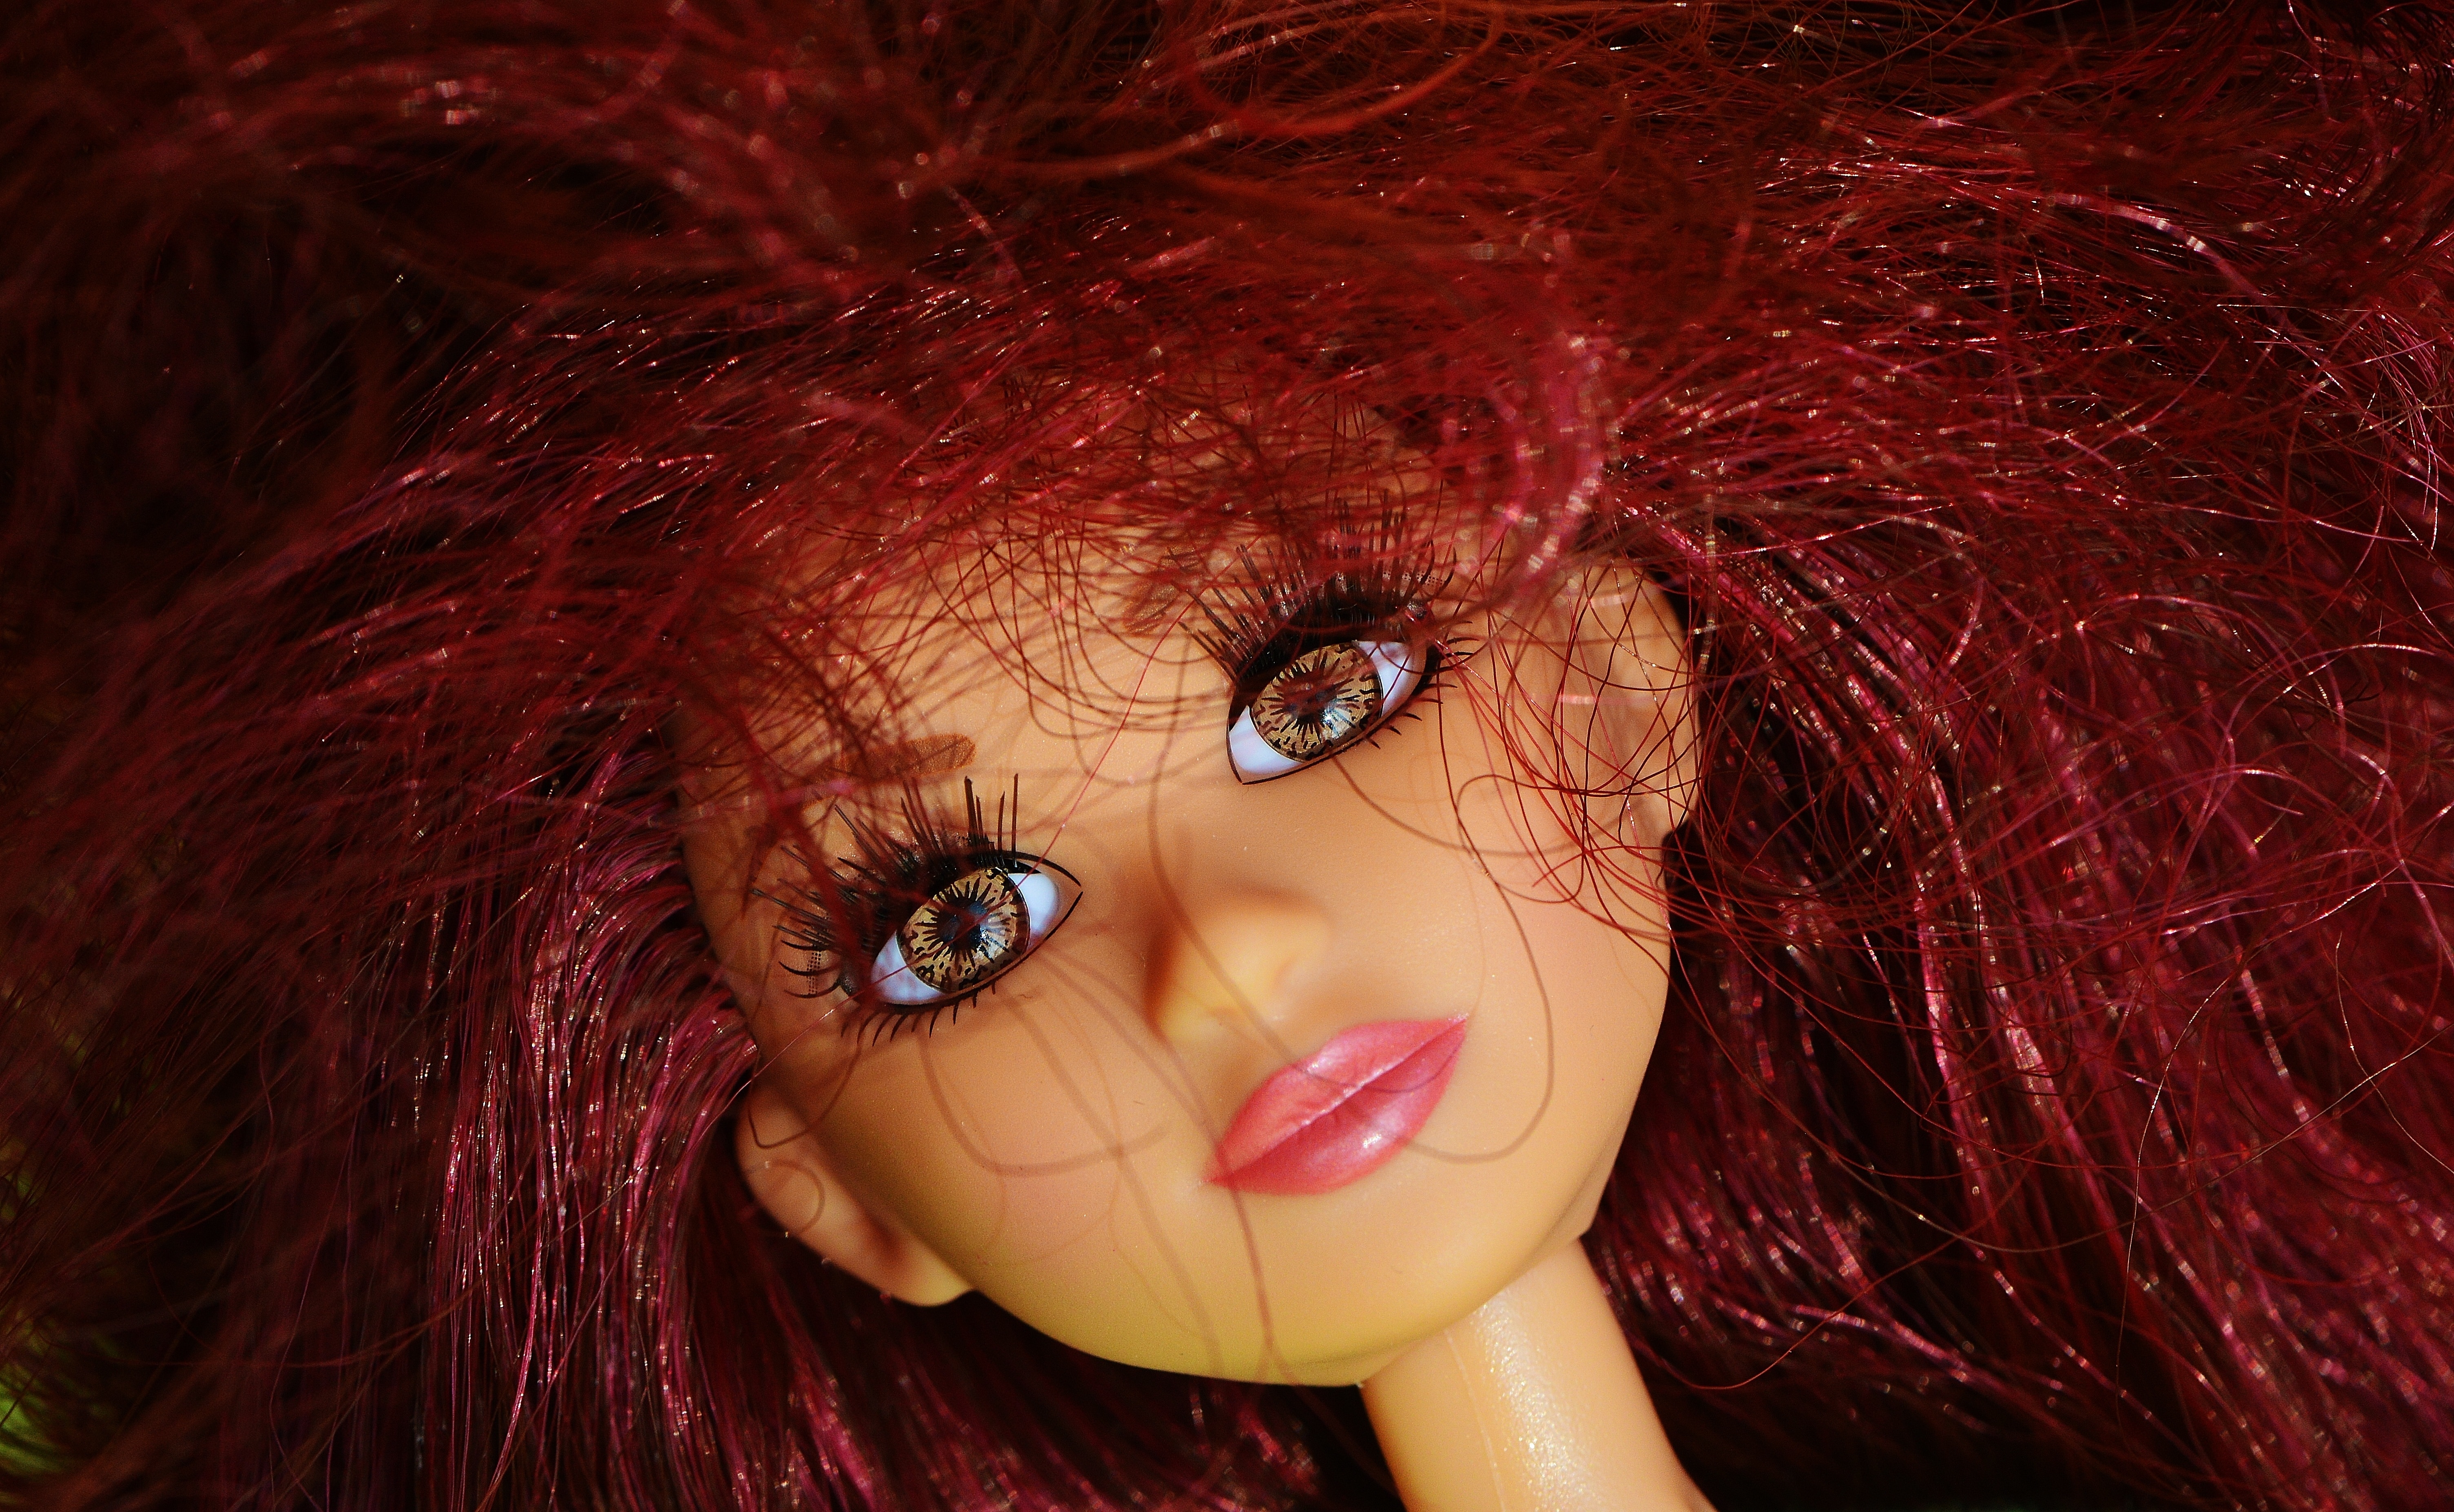 bratz doll with red eyes